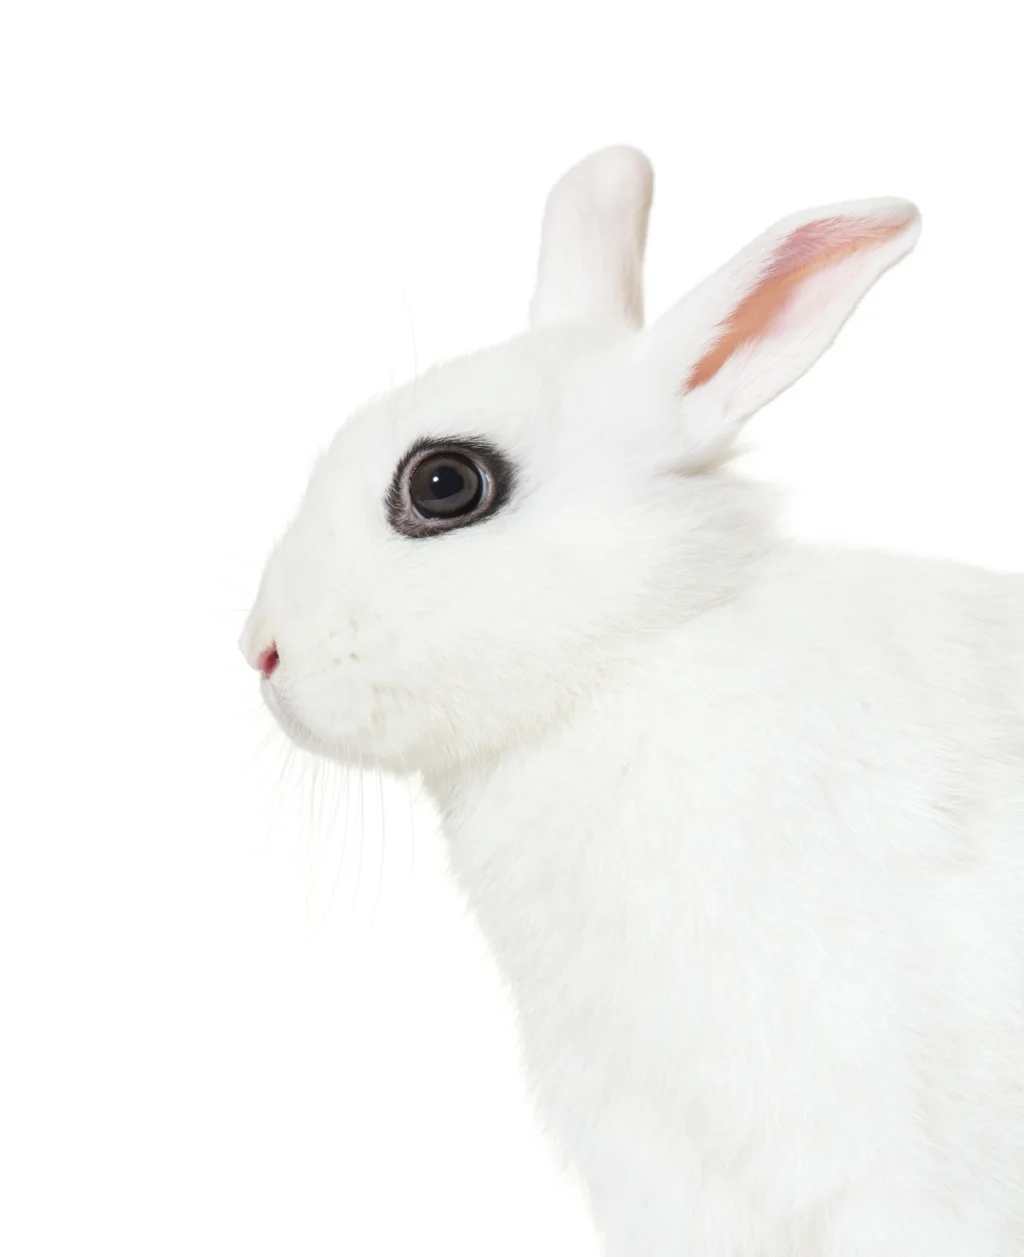 Un lapin blanc de Hotot.